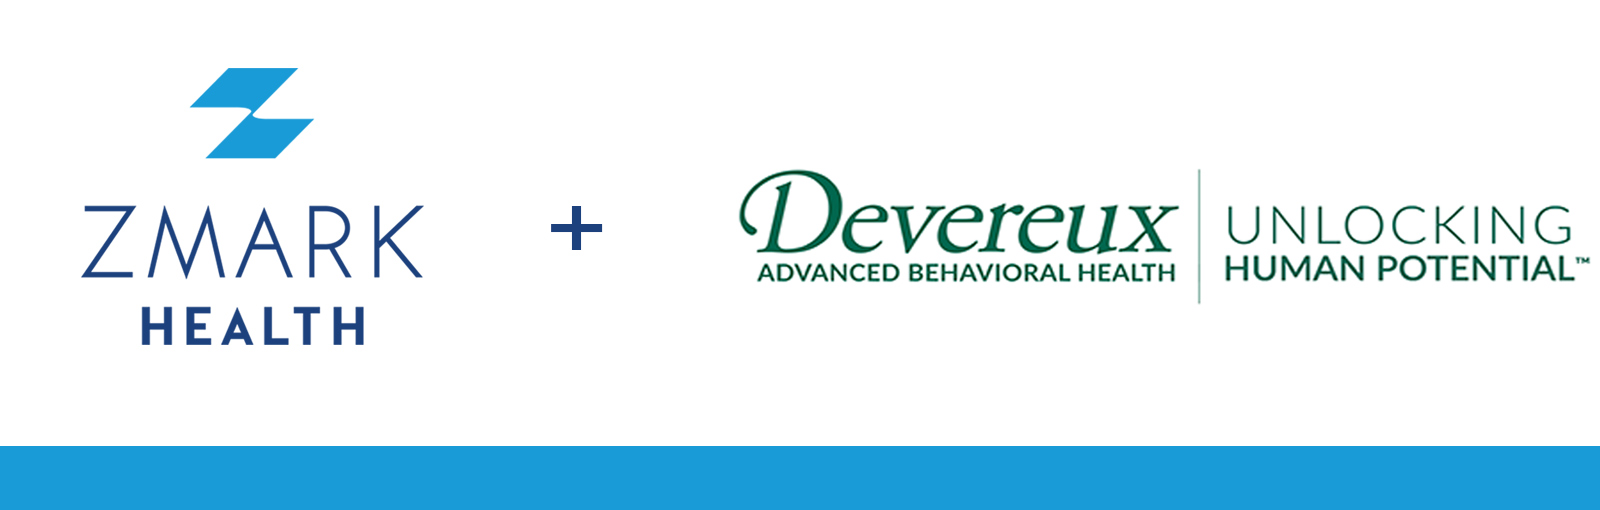 Devereux Advanced Behavioral Health Partners with ZMark Health